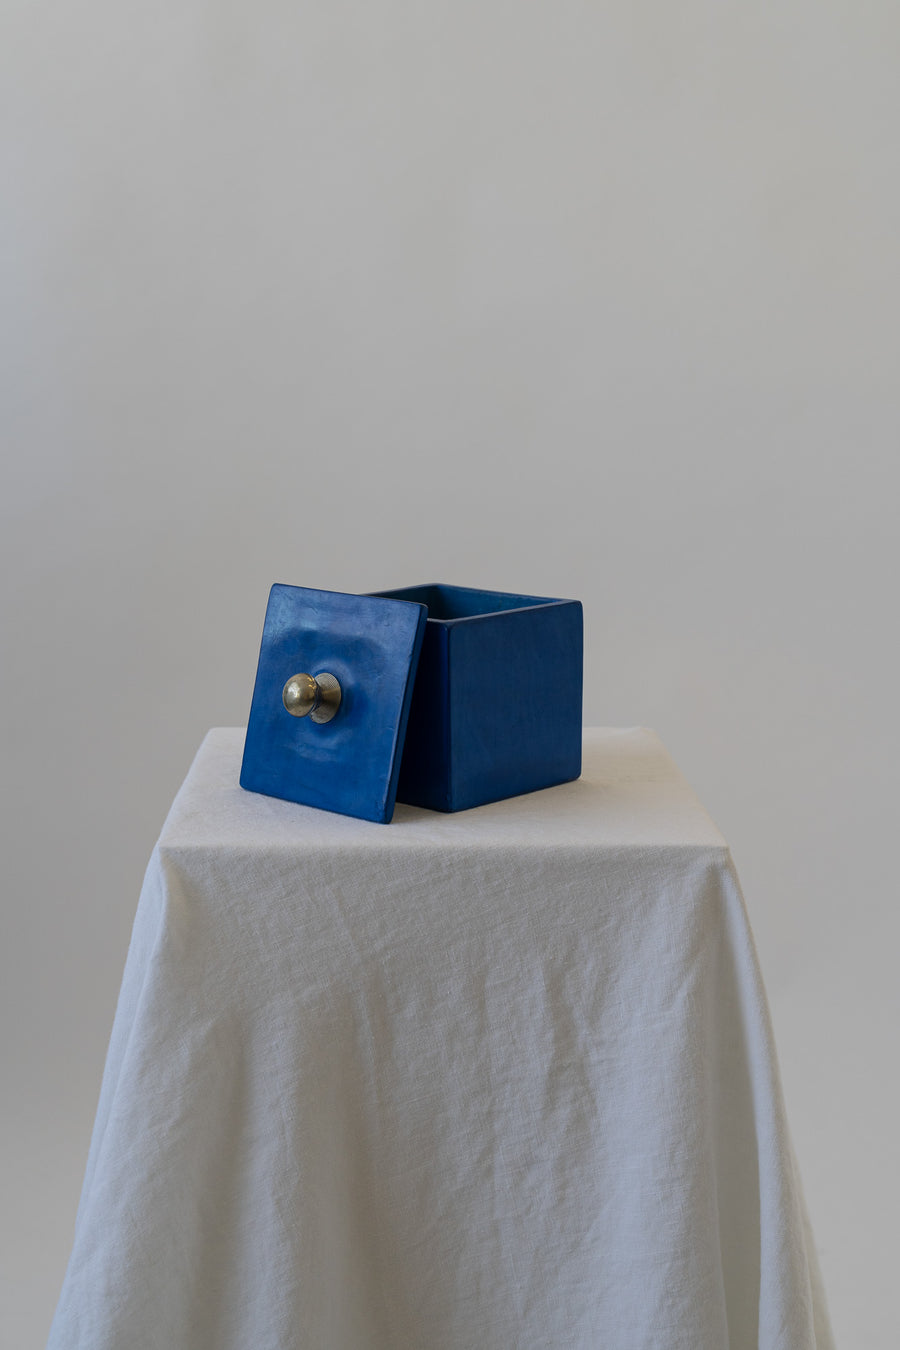 Marrakech Blue Trinket Box